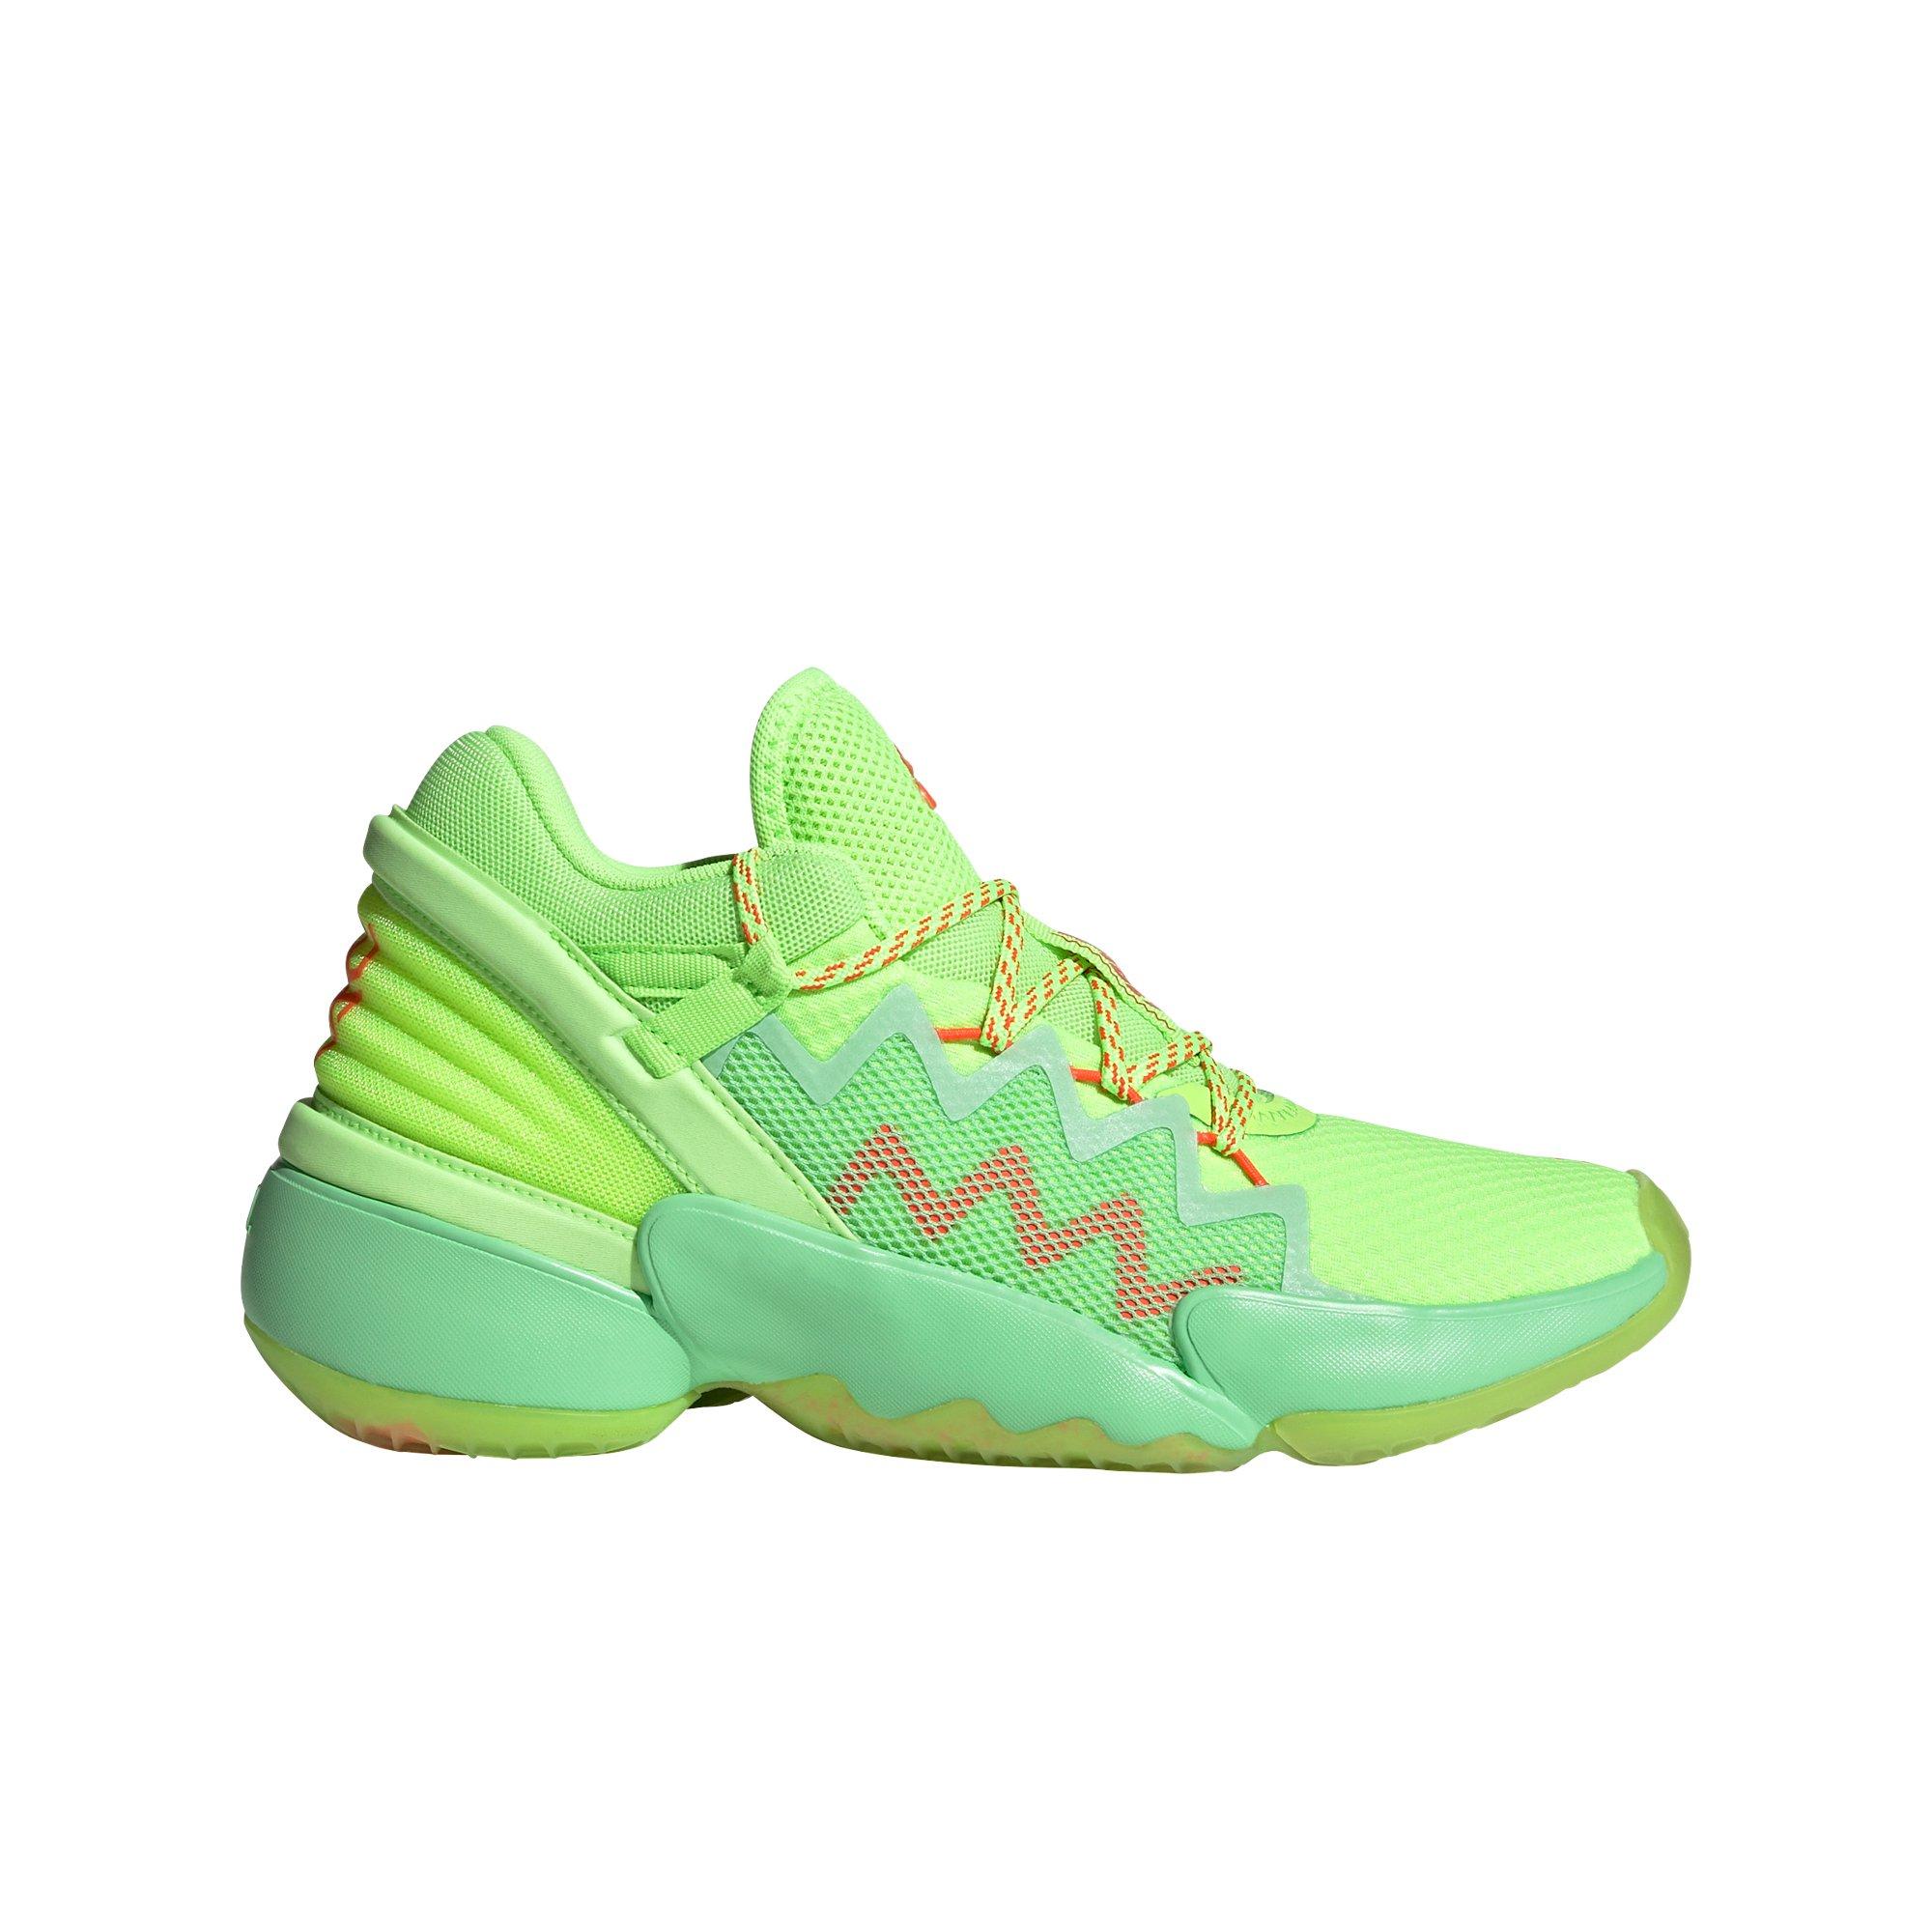 hibbets basketball shoes